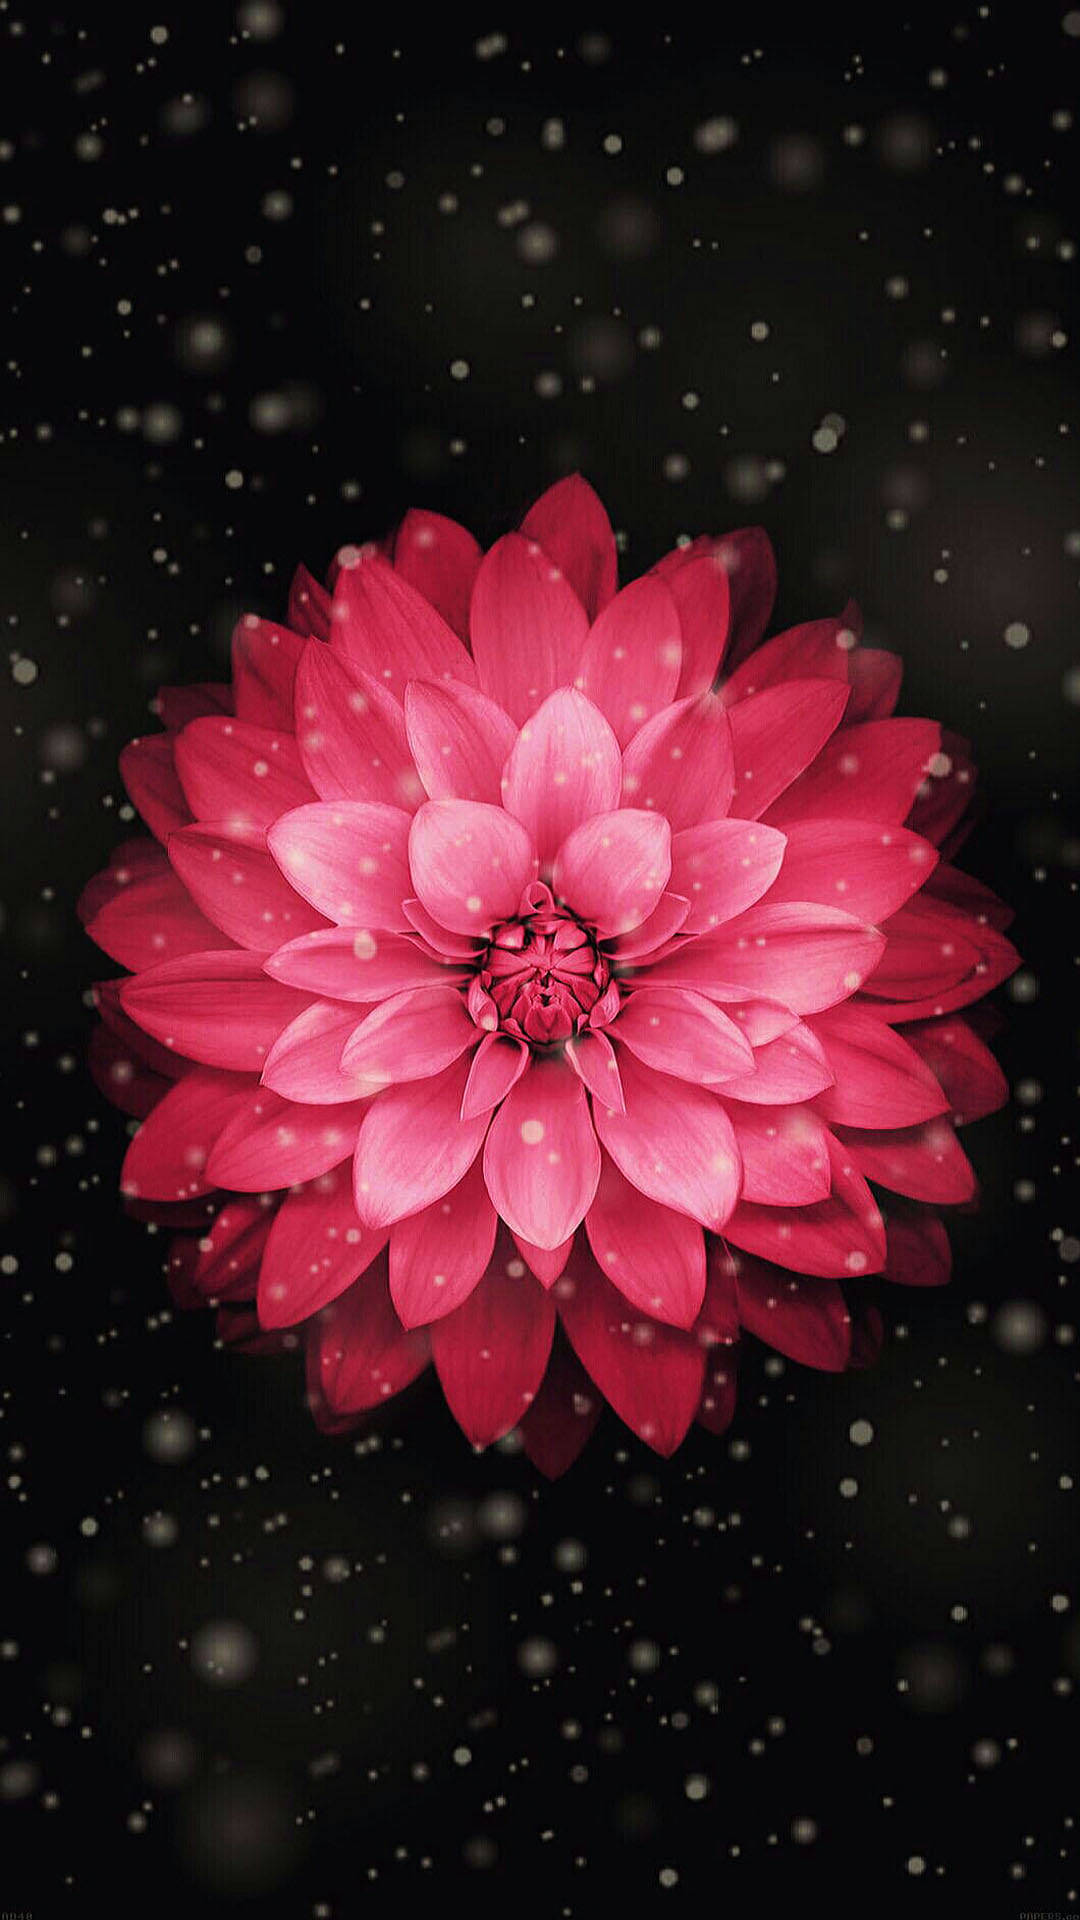 Red Lotus Flower iPhone X Nature Wallpaper